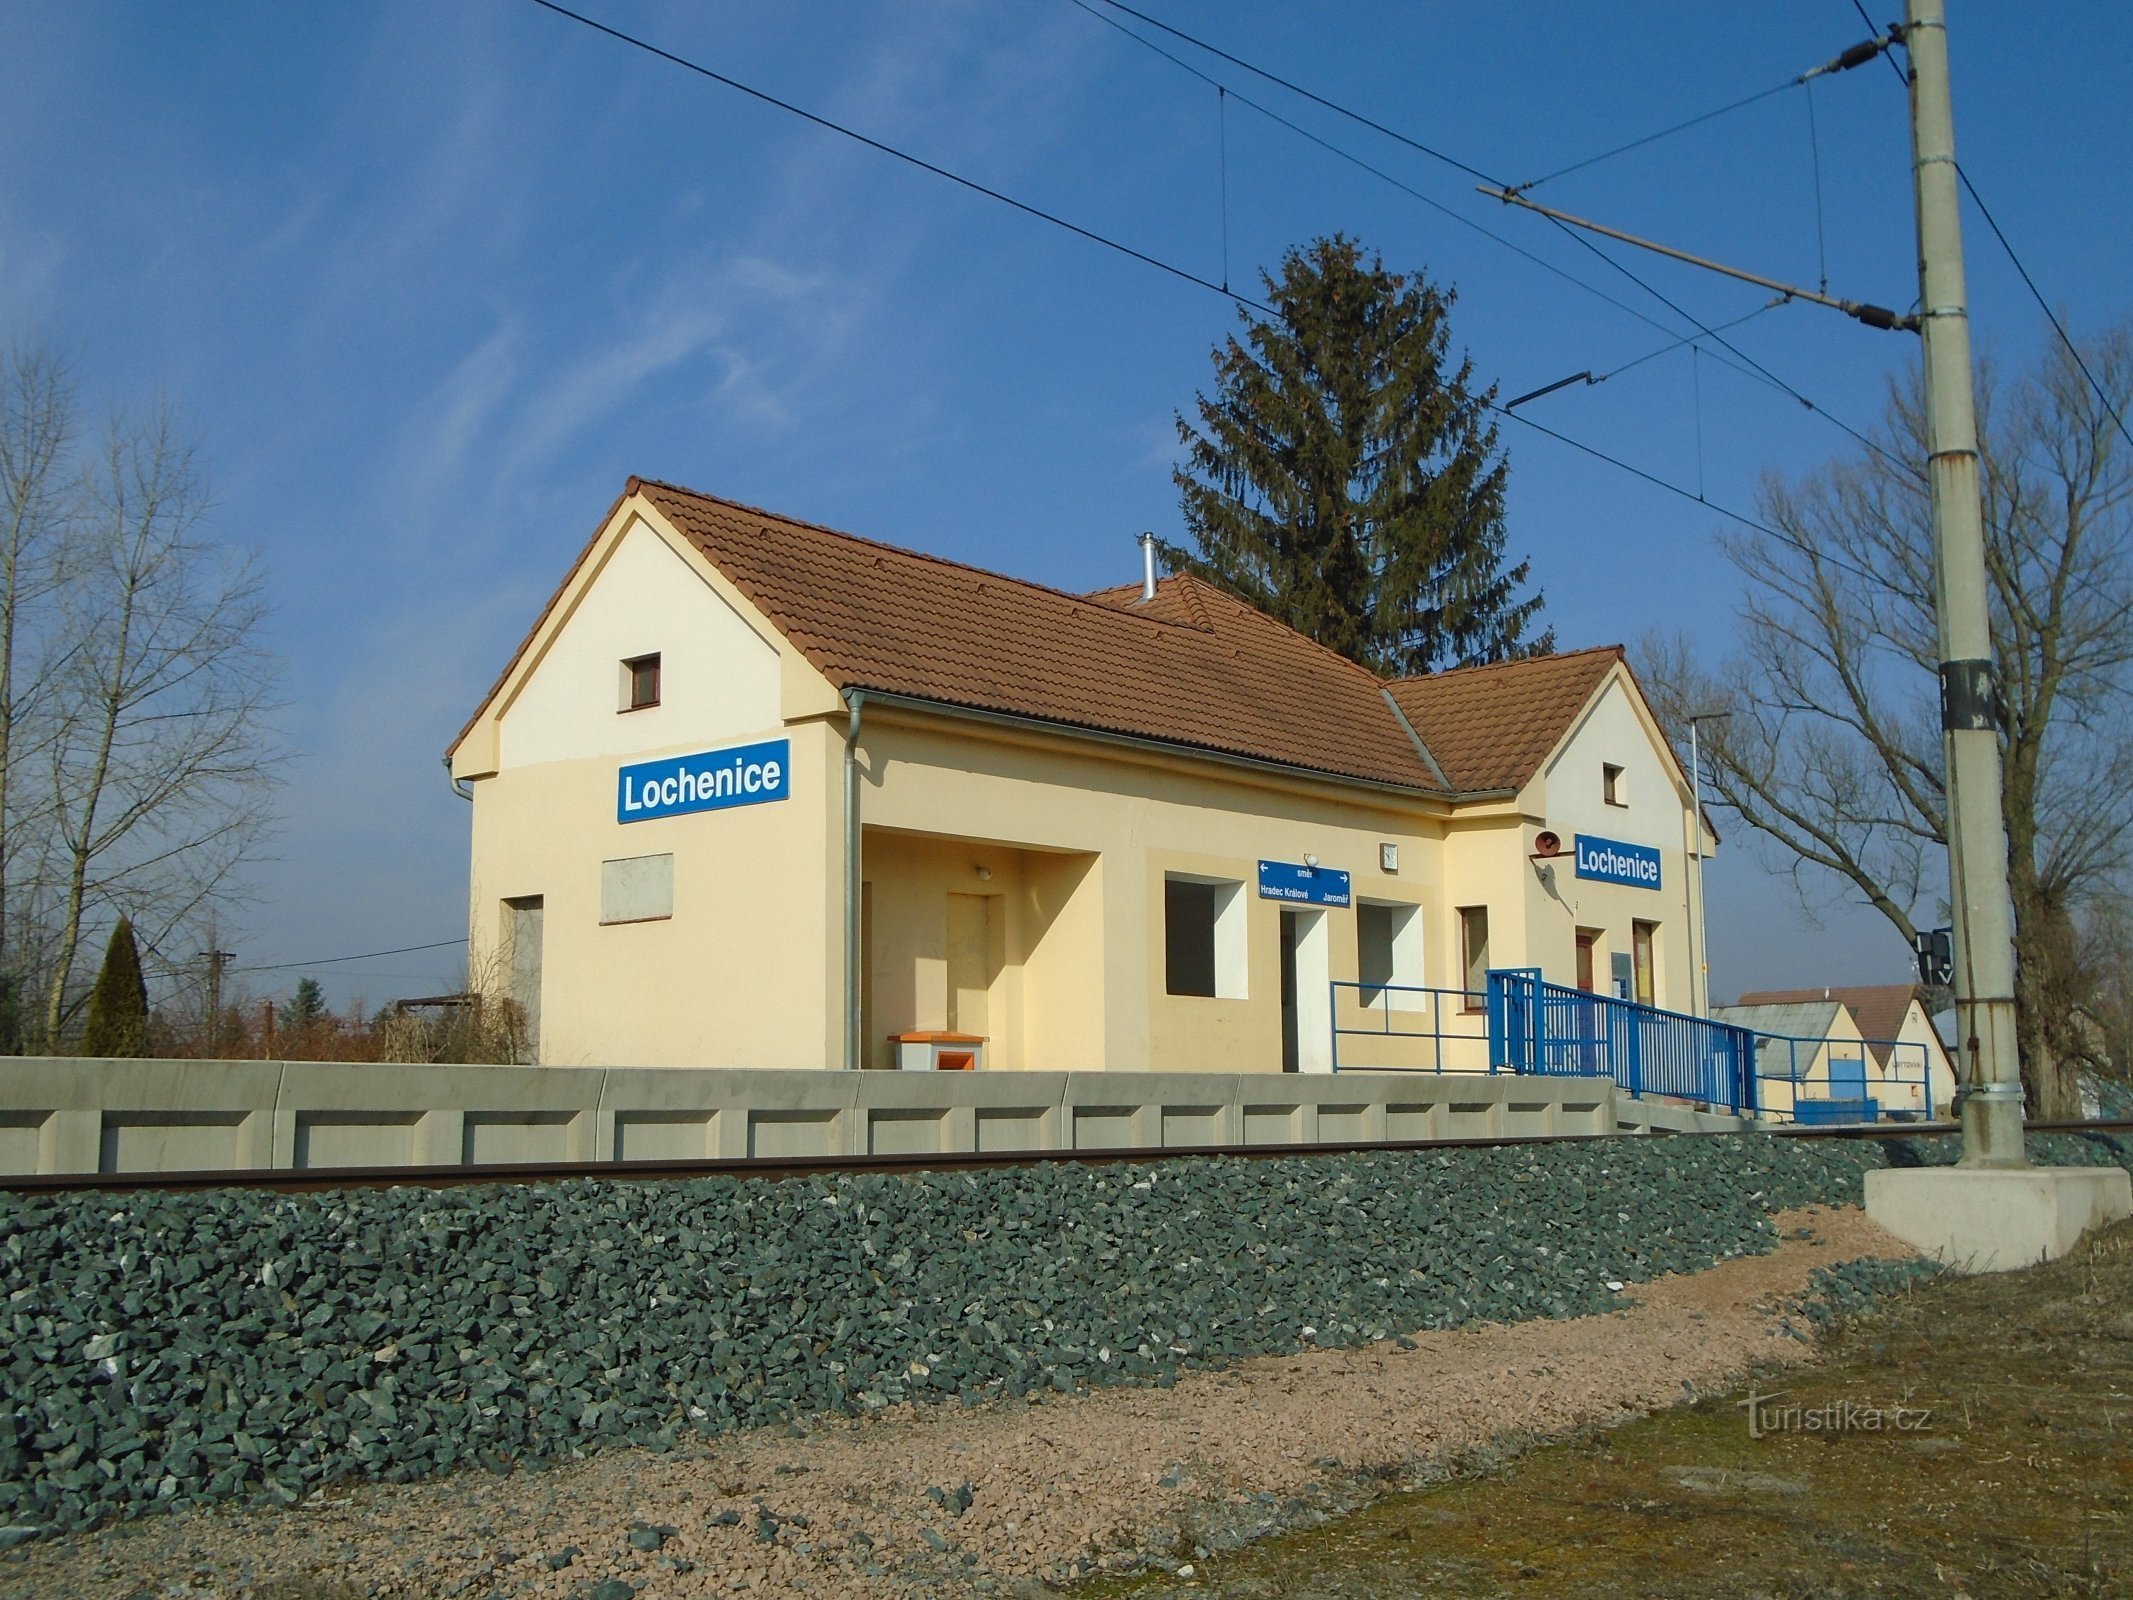 Jernbanestation (Lochenice)